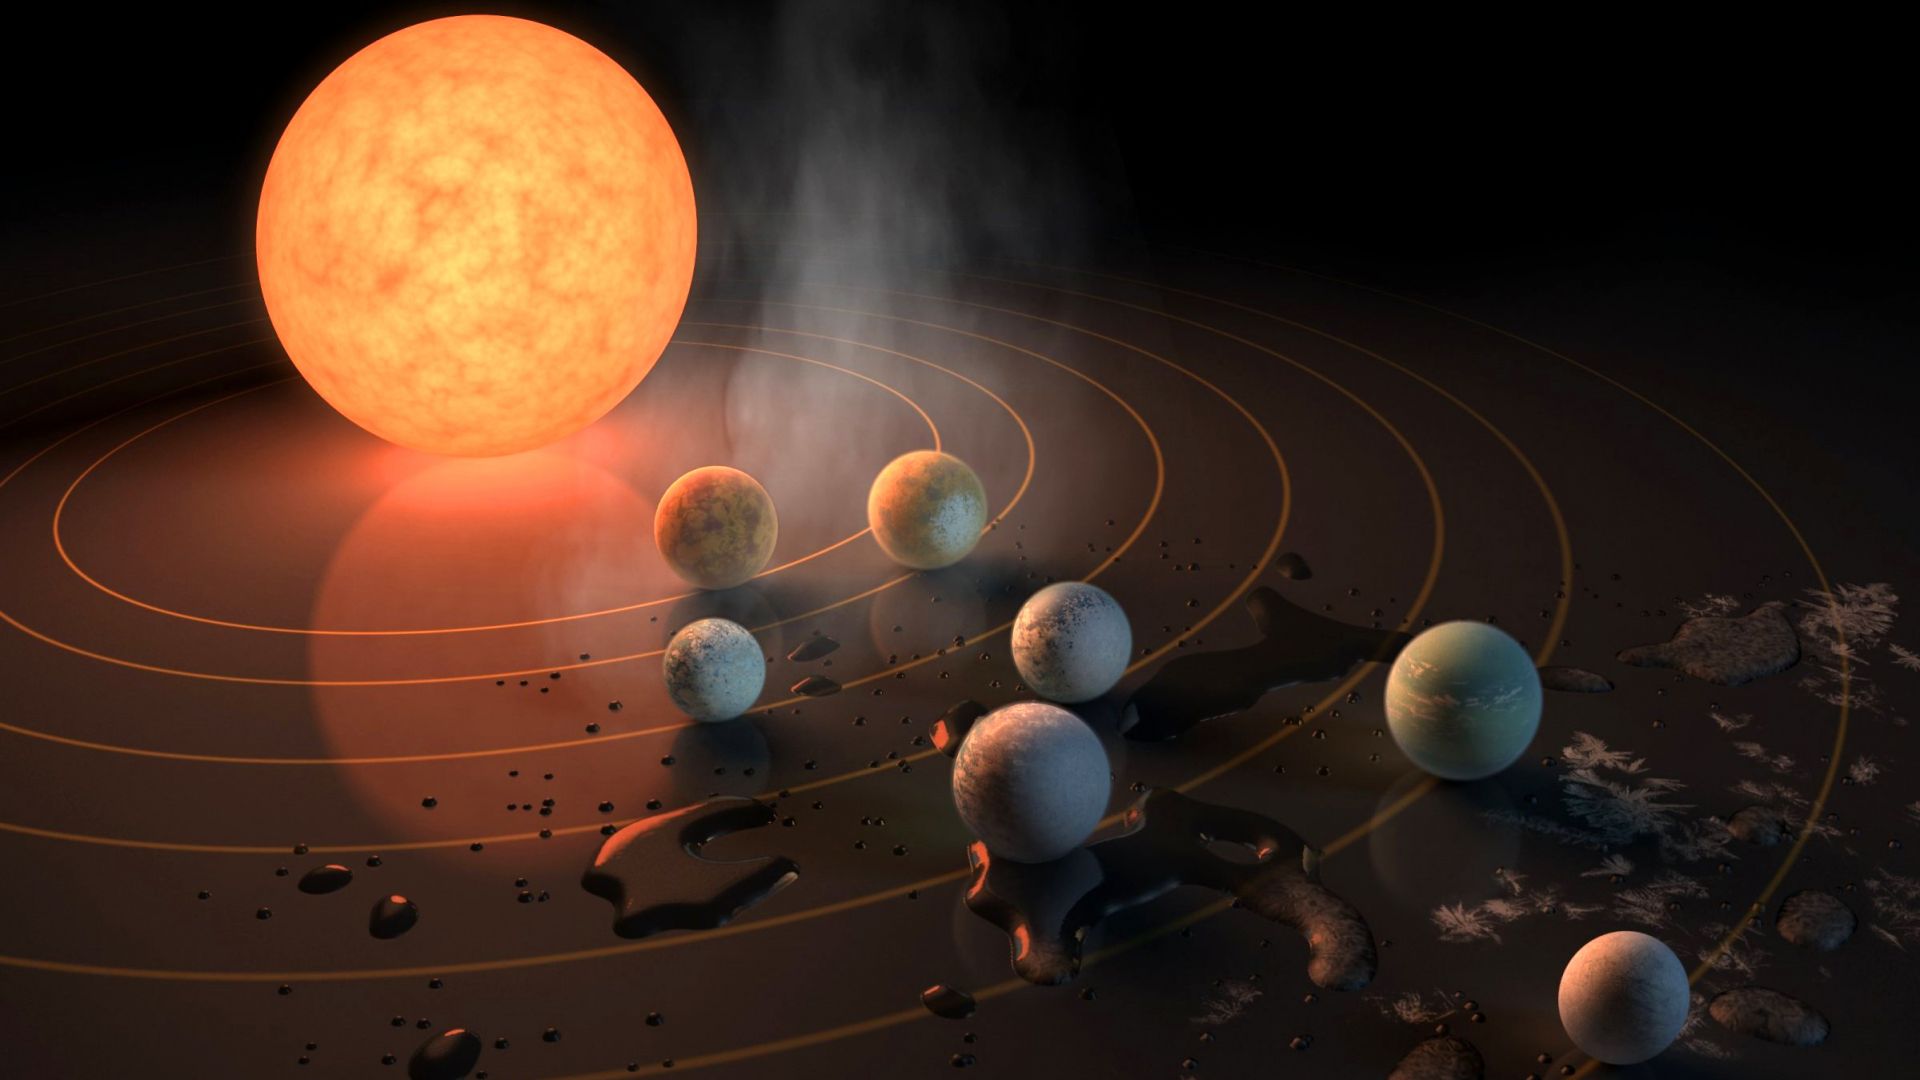 TRAPPIST-1, exoplanet, star, planets (horizontal)